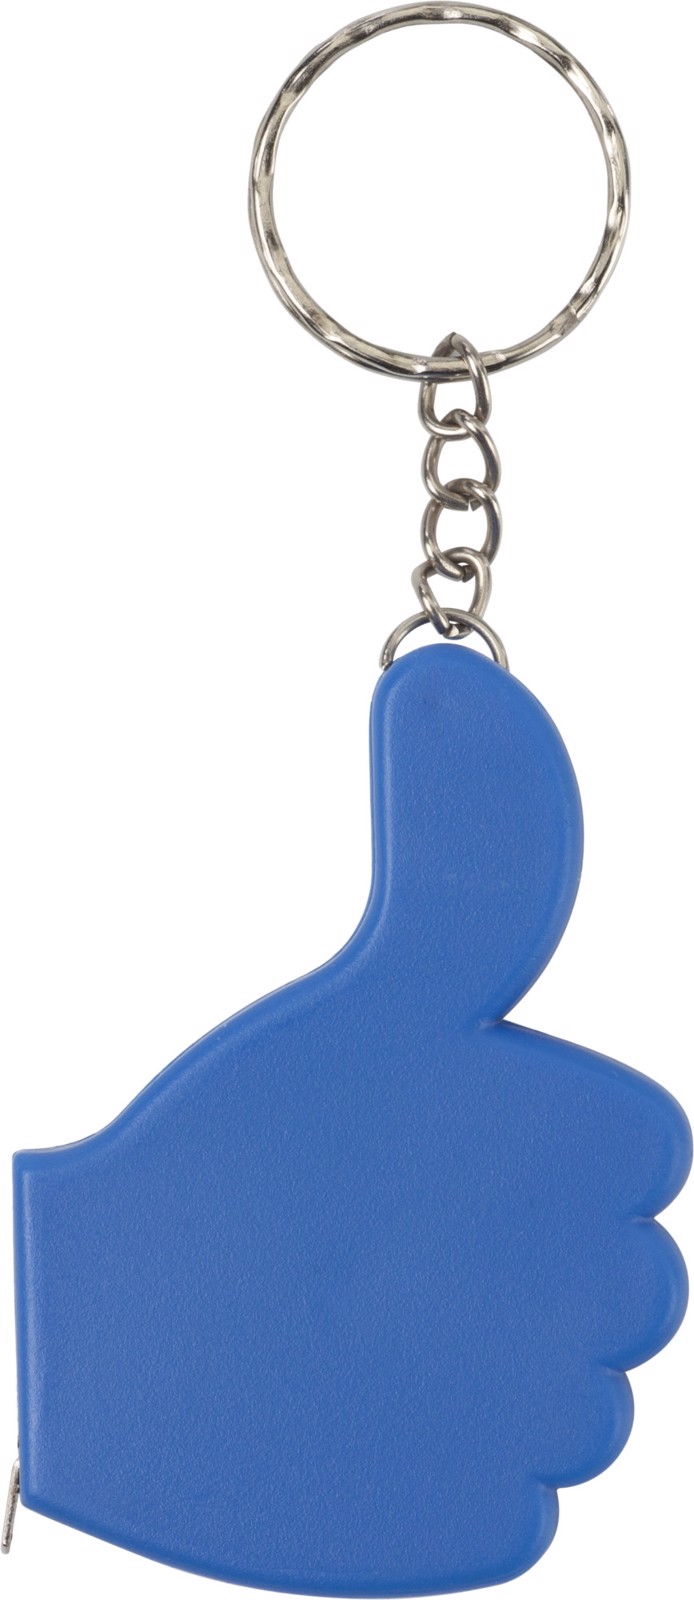 PE 2-in-1 key holder - Light Blue